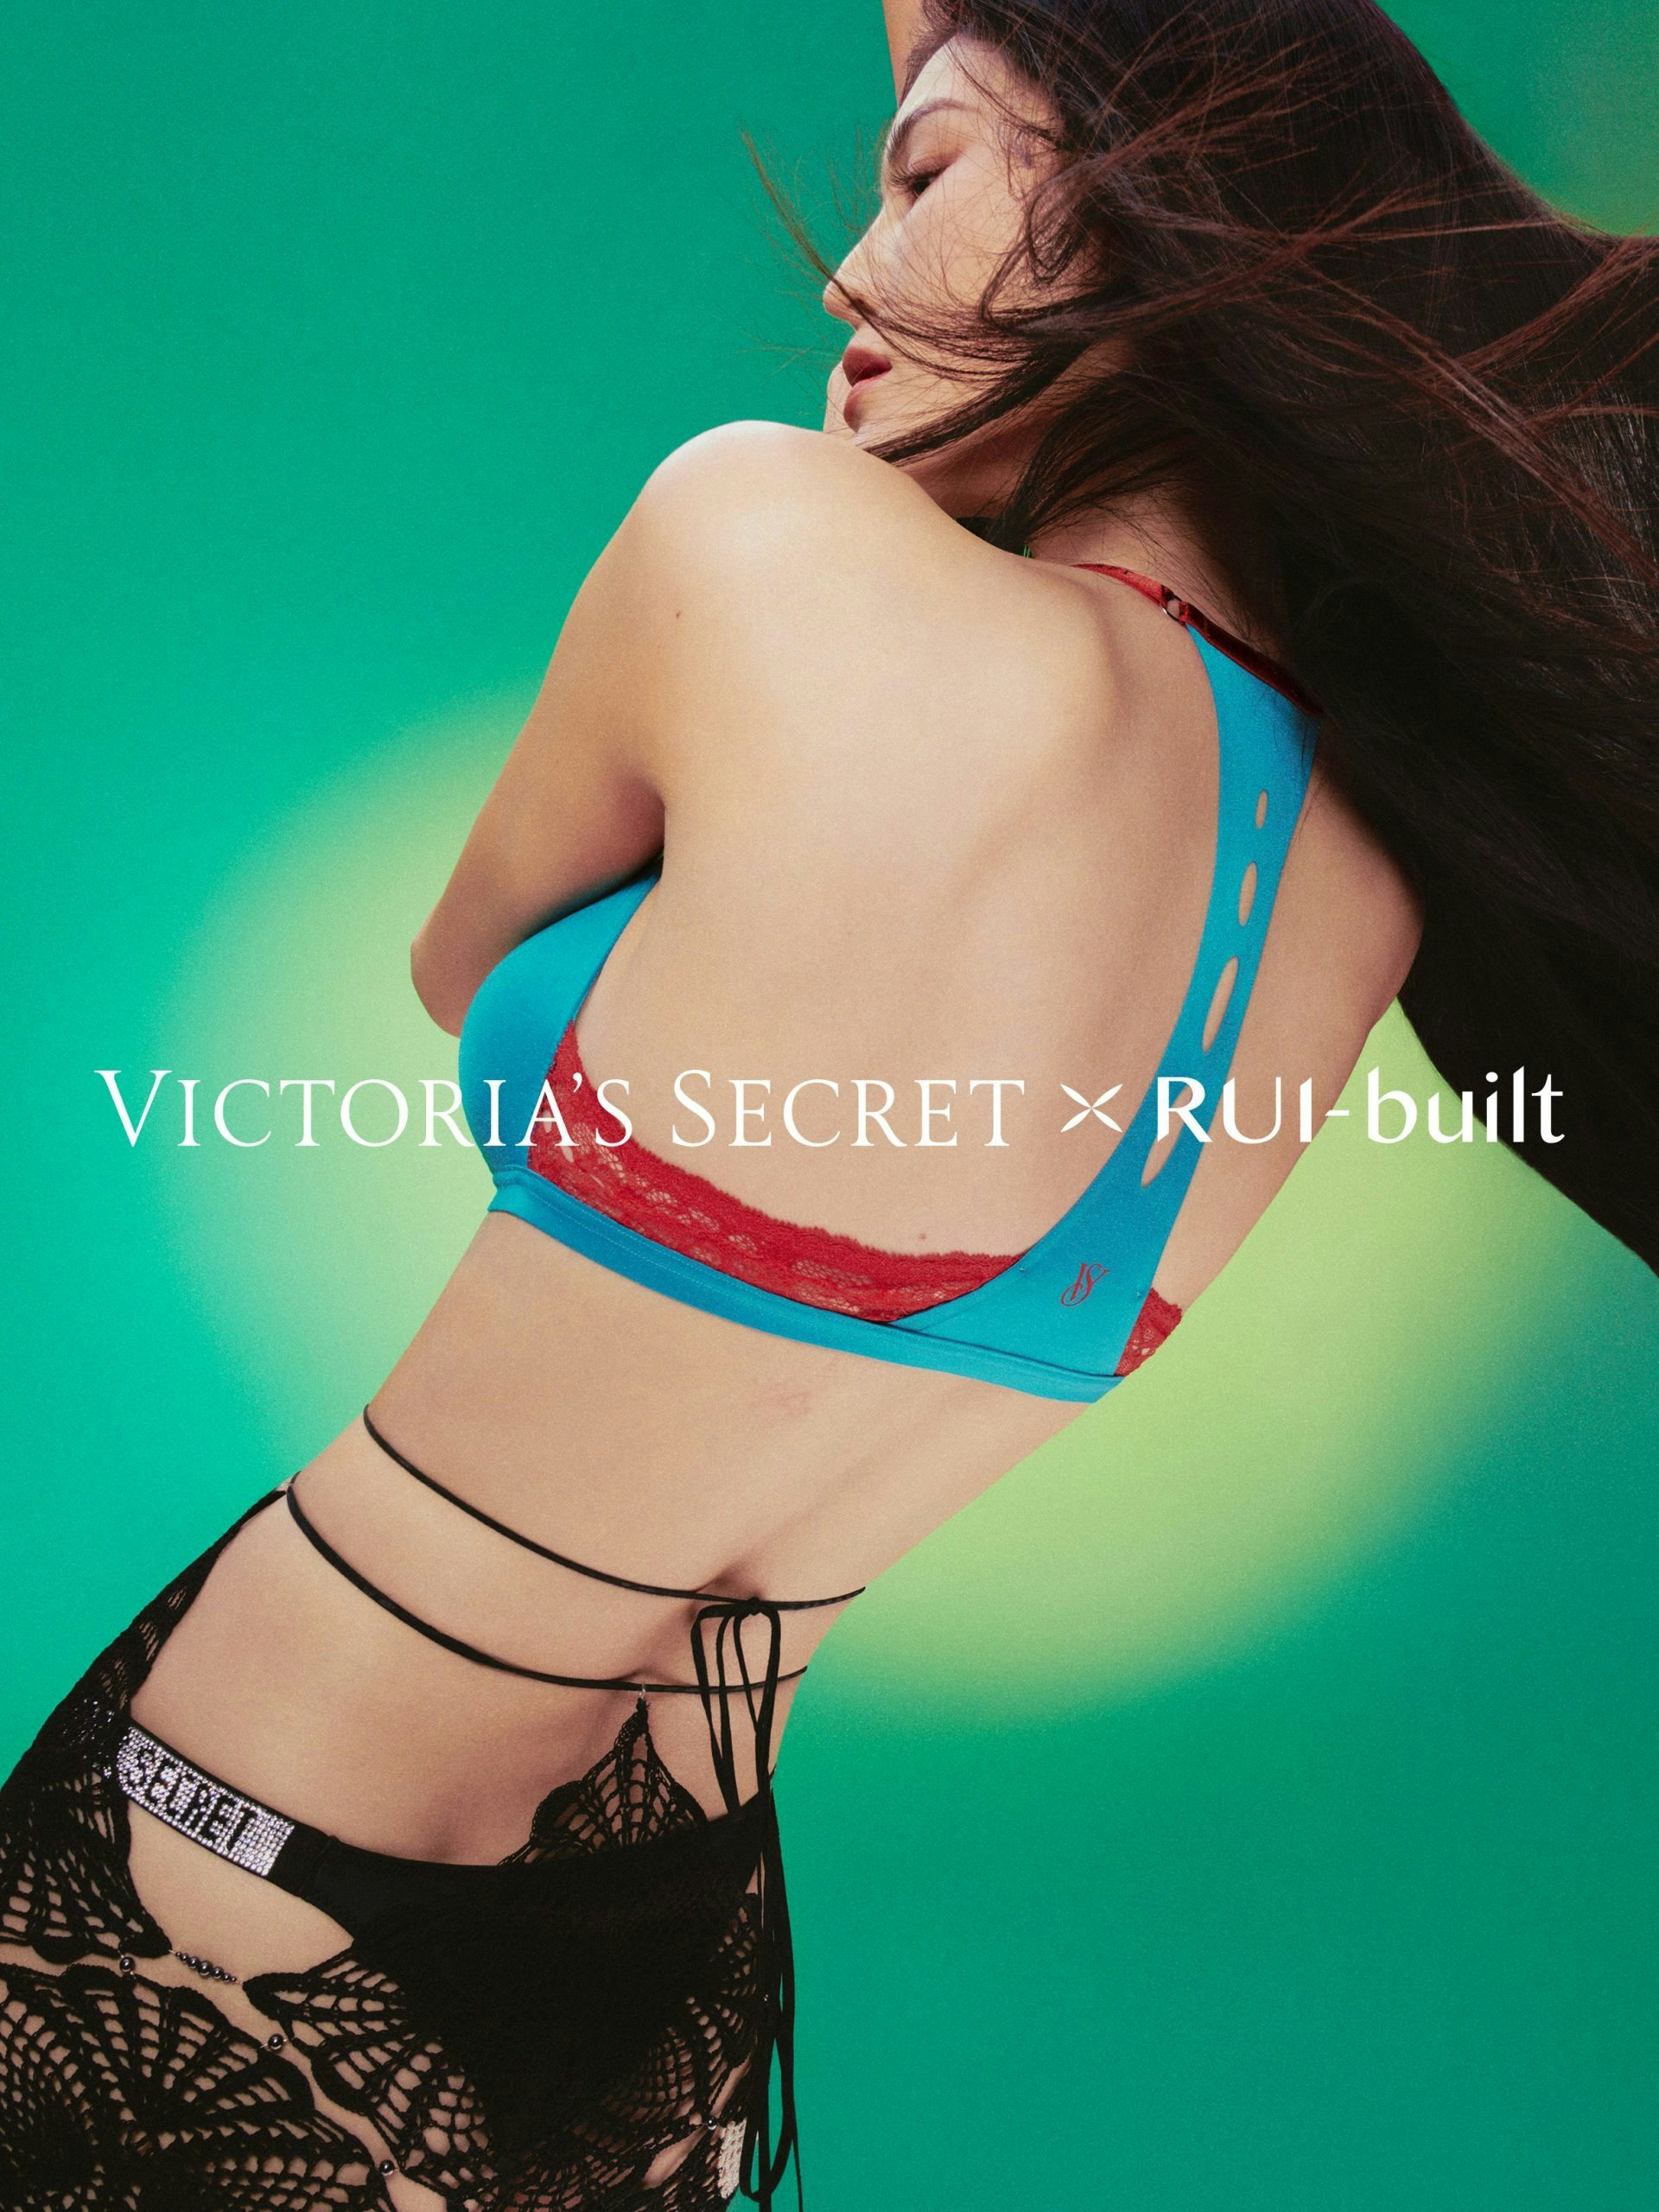 Rui brings her avant-garde sexuality to the Victoria's Secret brand. Photo: Victoria's Secret